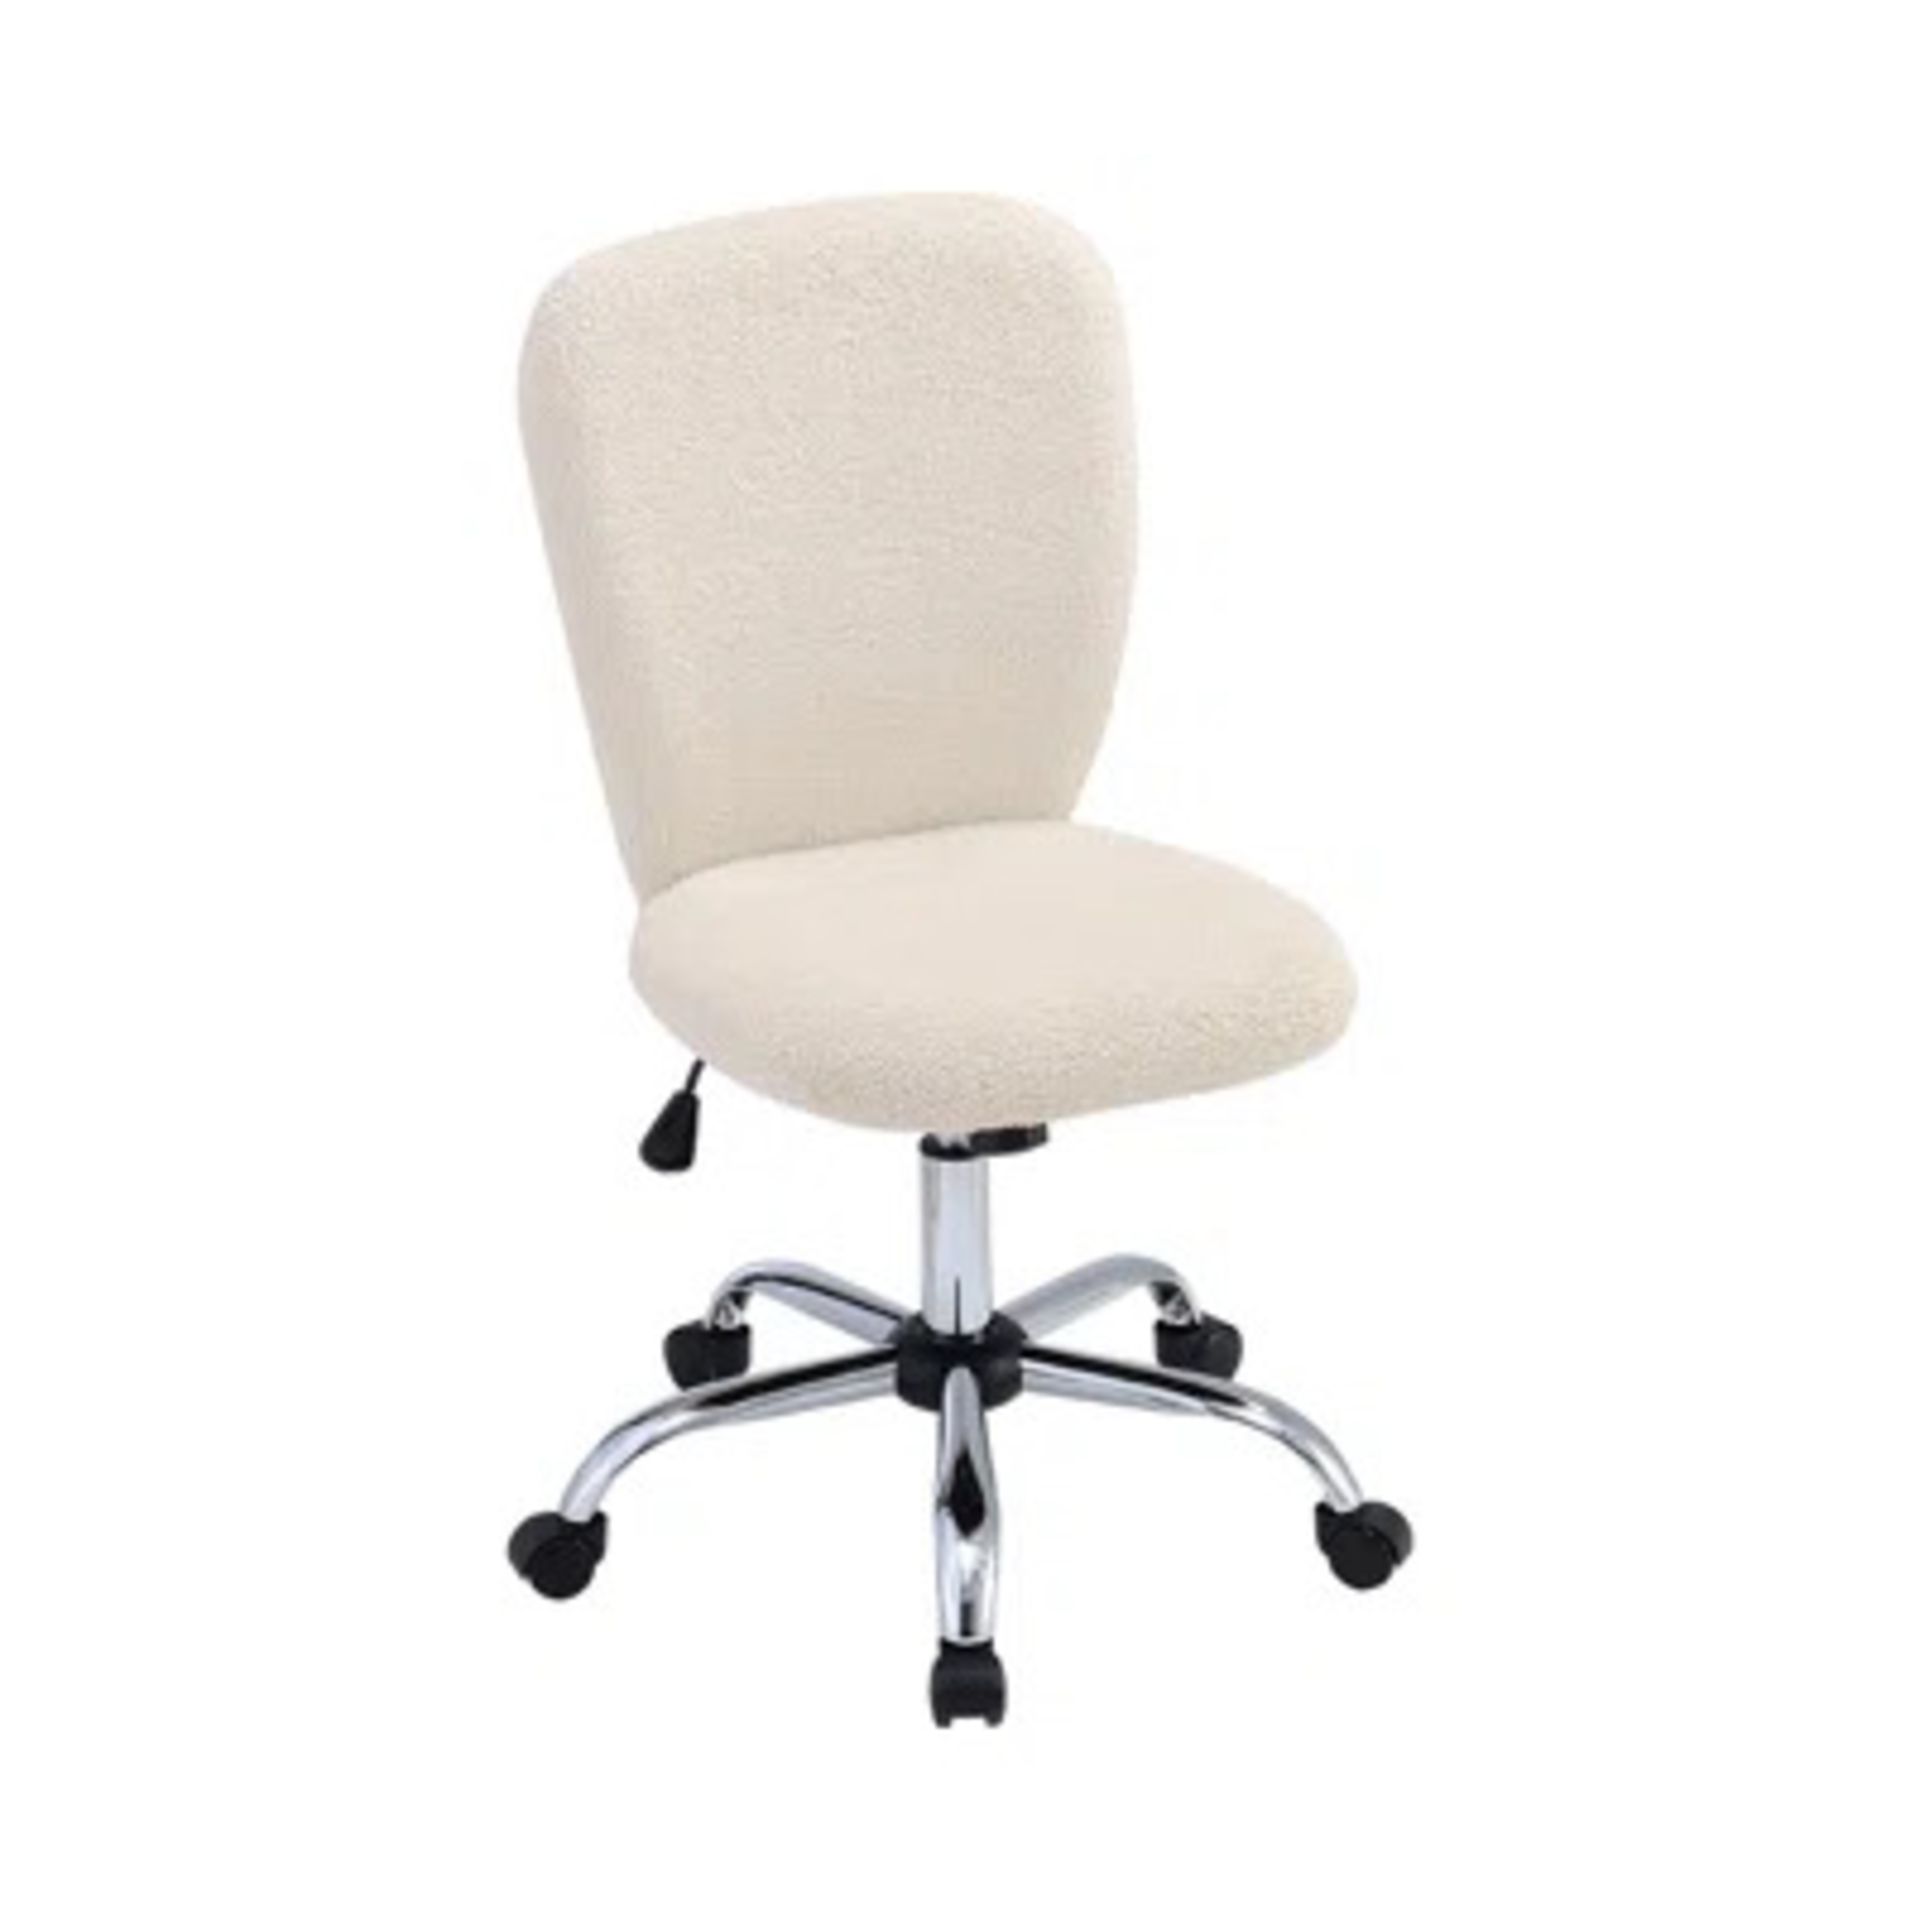 RRP £70.99 - Krilov Ergonomic Office Chair Upholstery Colour: Beige